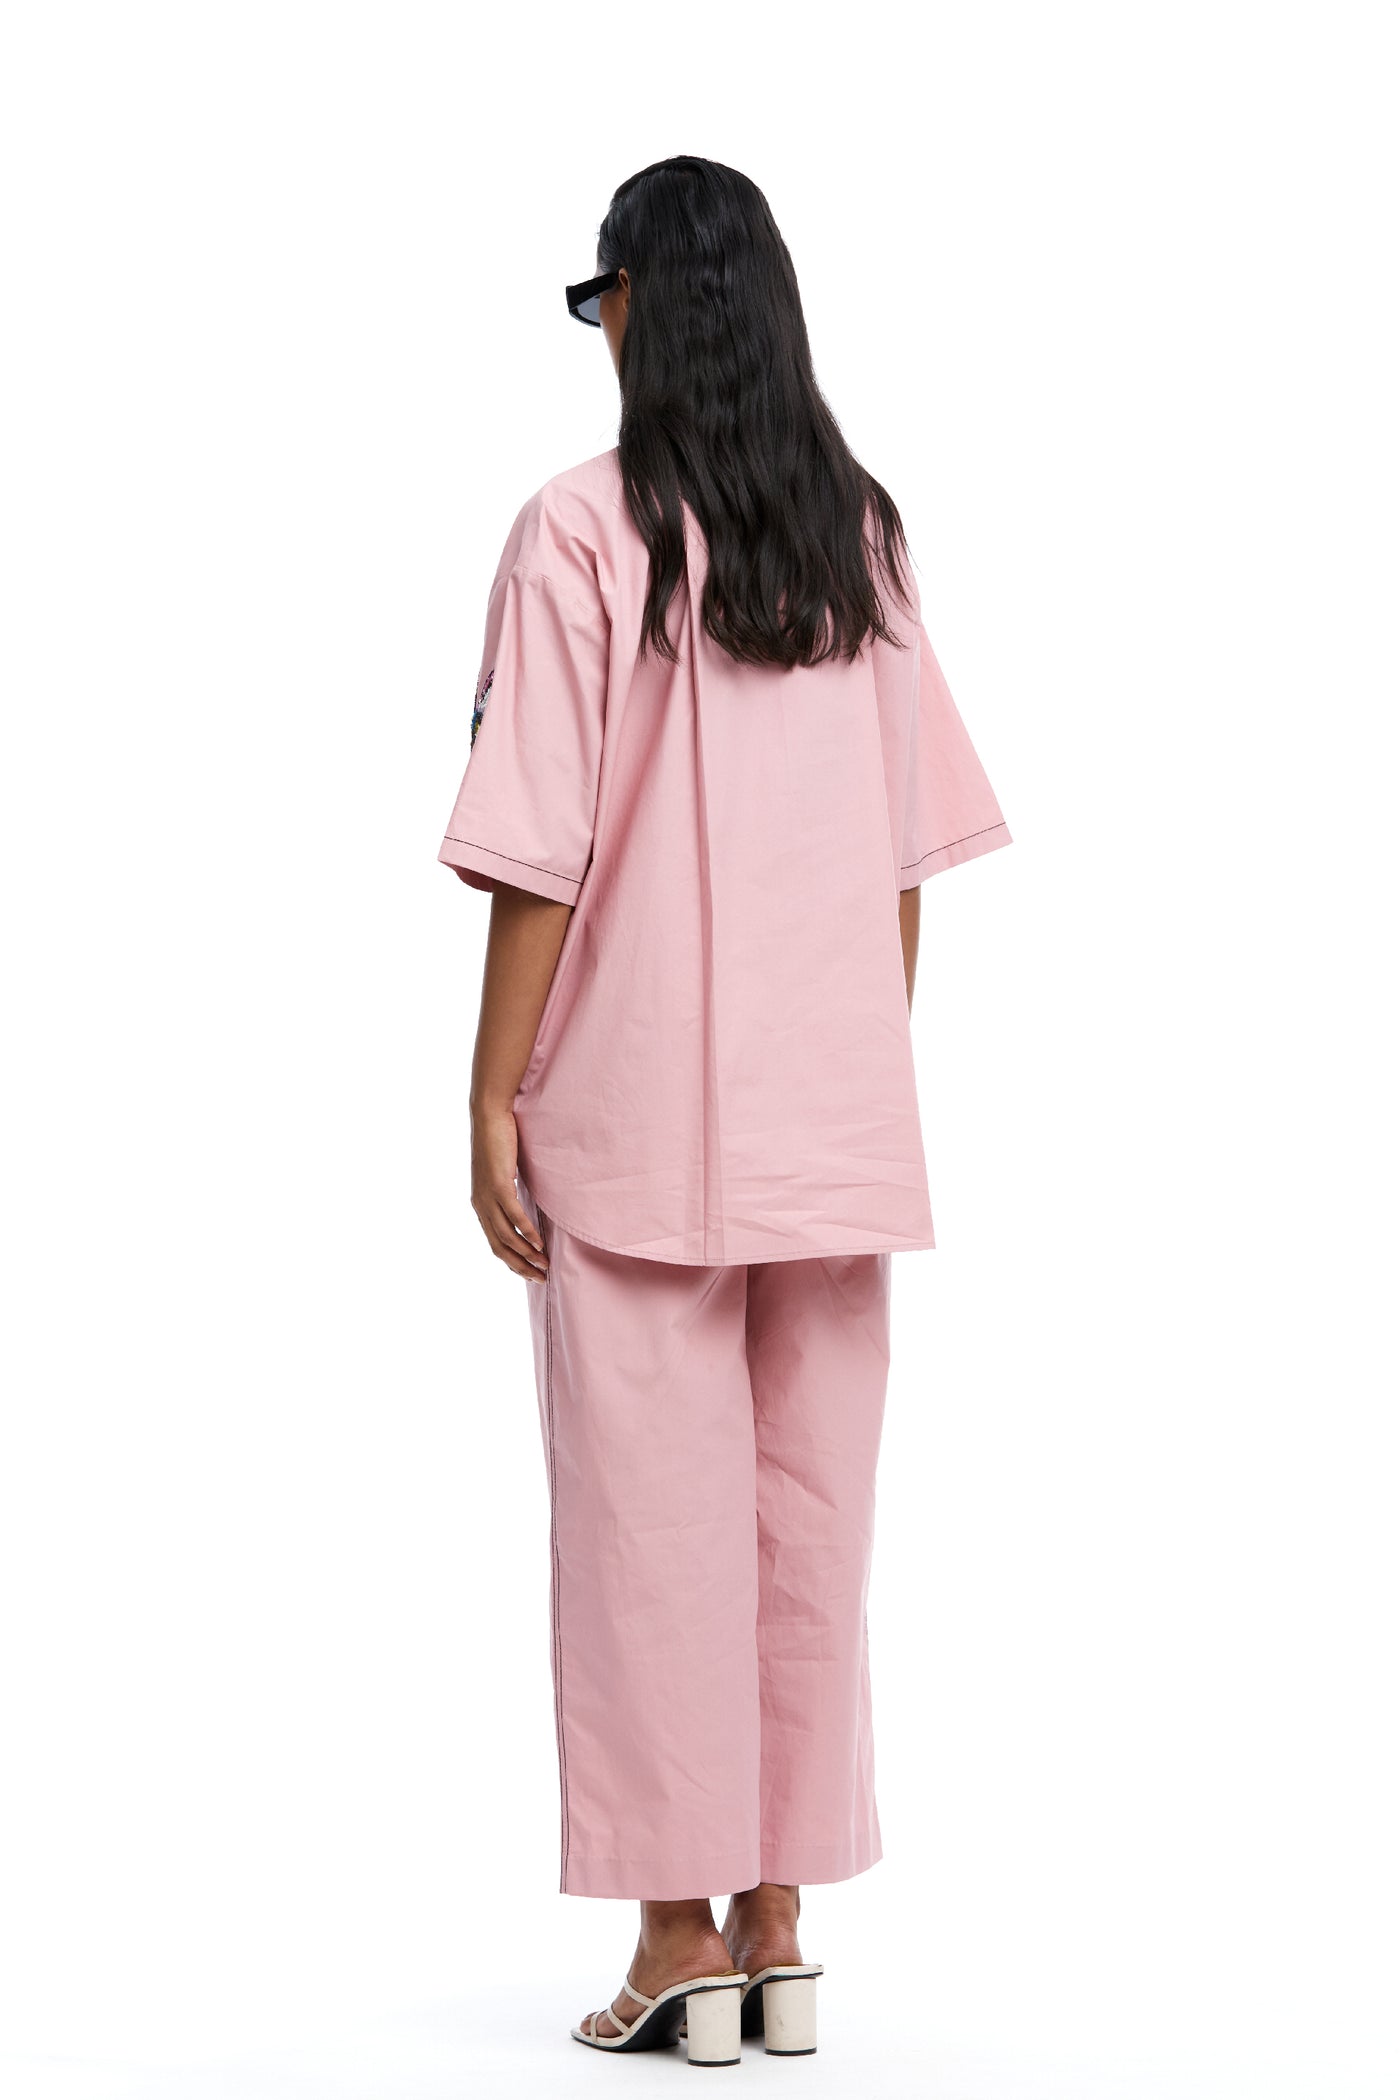 Kanika Goyal Label Talia Ruched Embellished Shirt Pink indian designer wear online shopping melange singapore